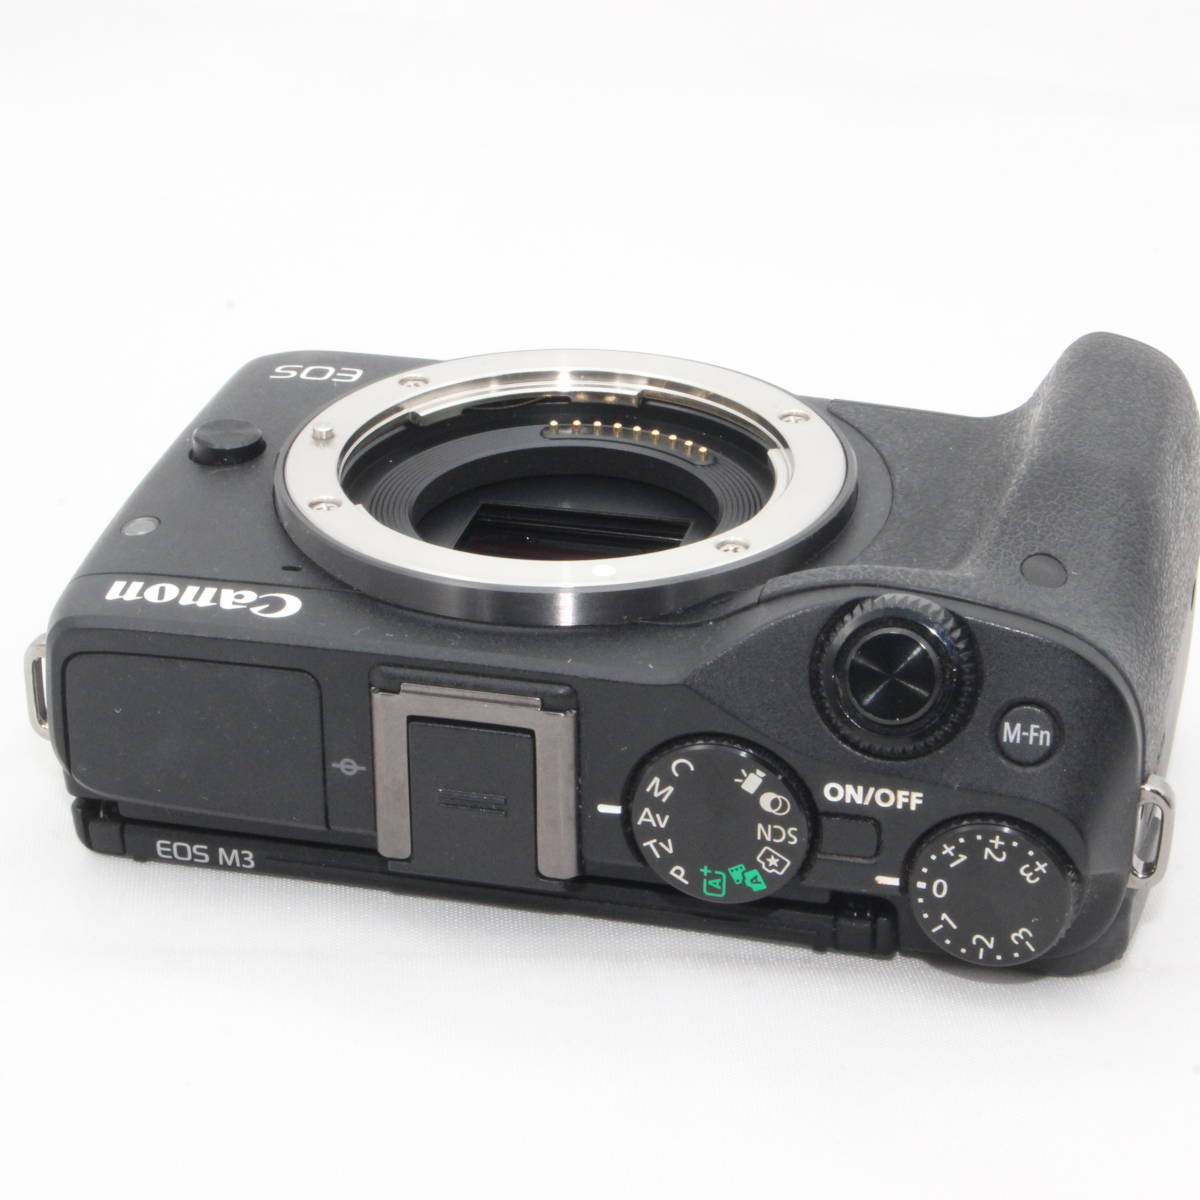 Canon ミラーレス一眼カメラ EOS M3 ボディ(ブラック) EOSM3BK-BODY #2206114